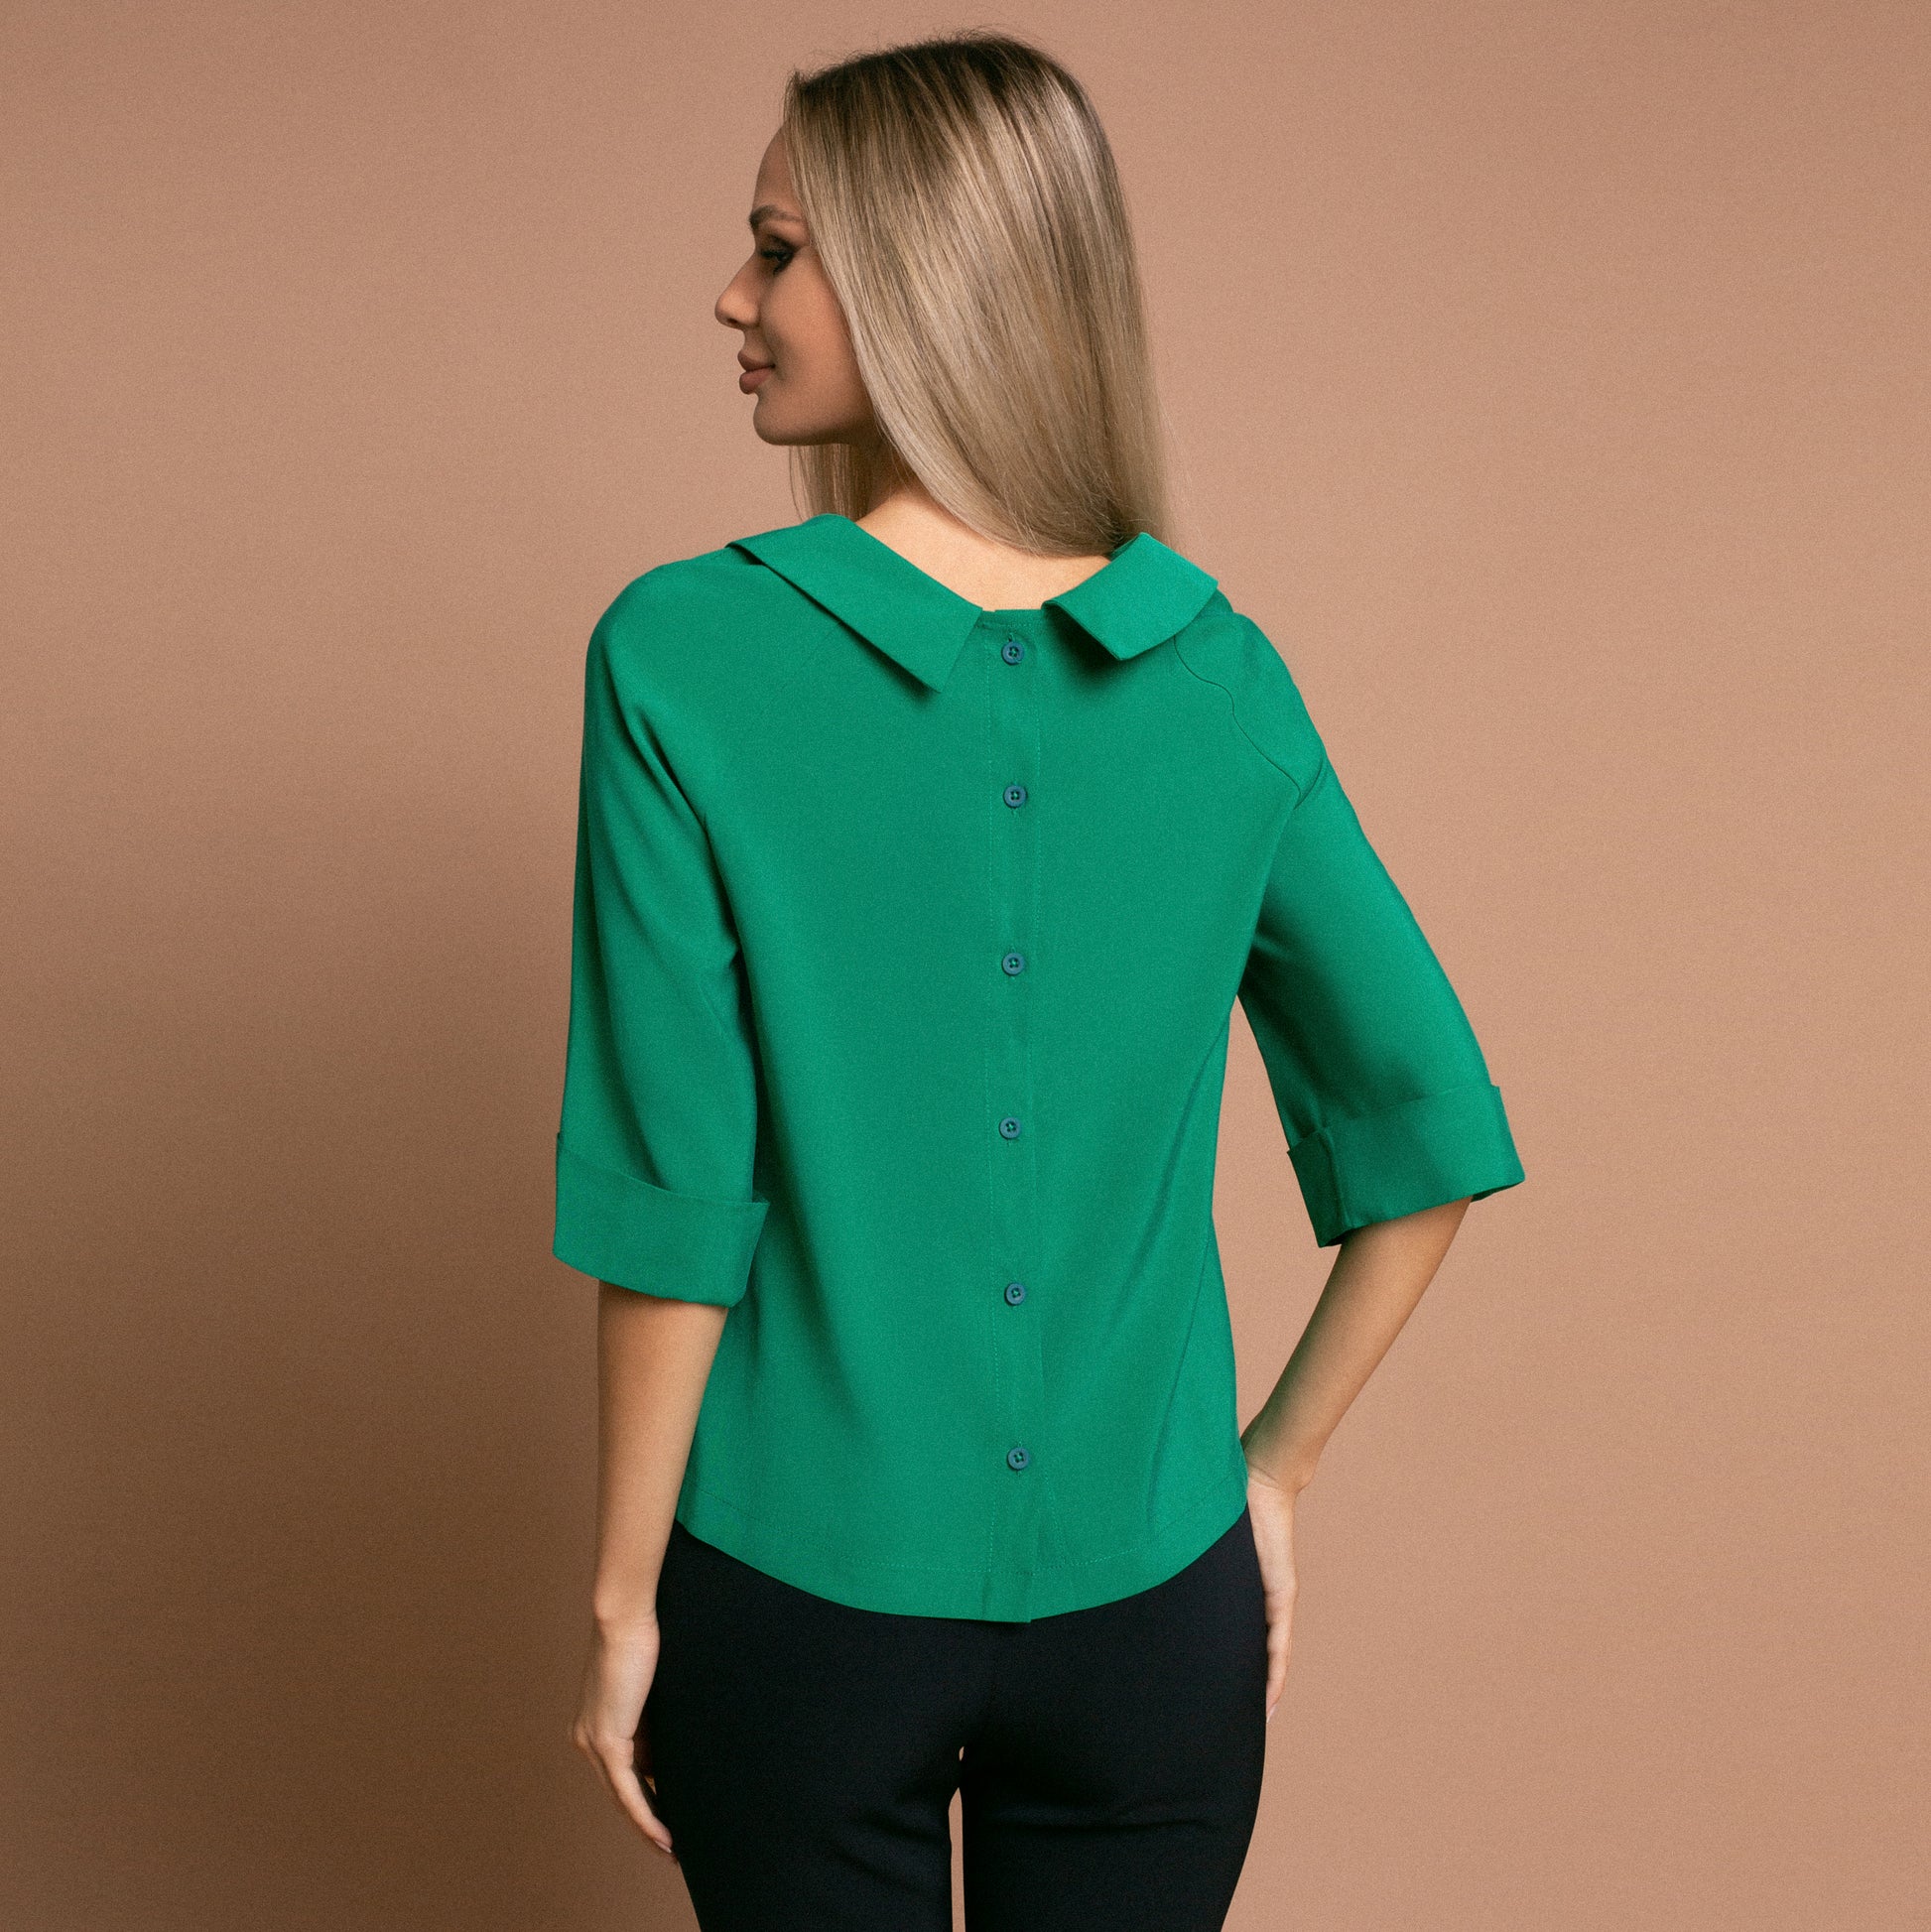 Bluza dama verde smarald cu guler mic, maneca 3 sferturi si nasturi la spate 3